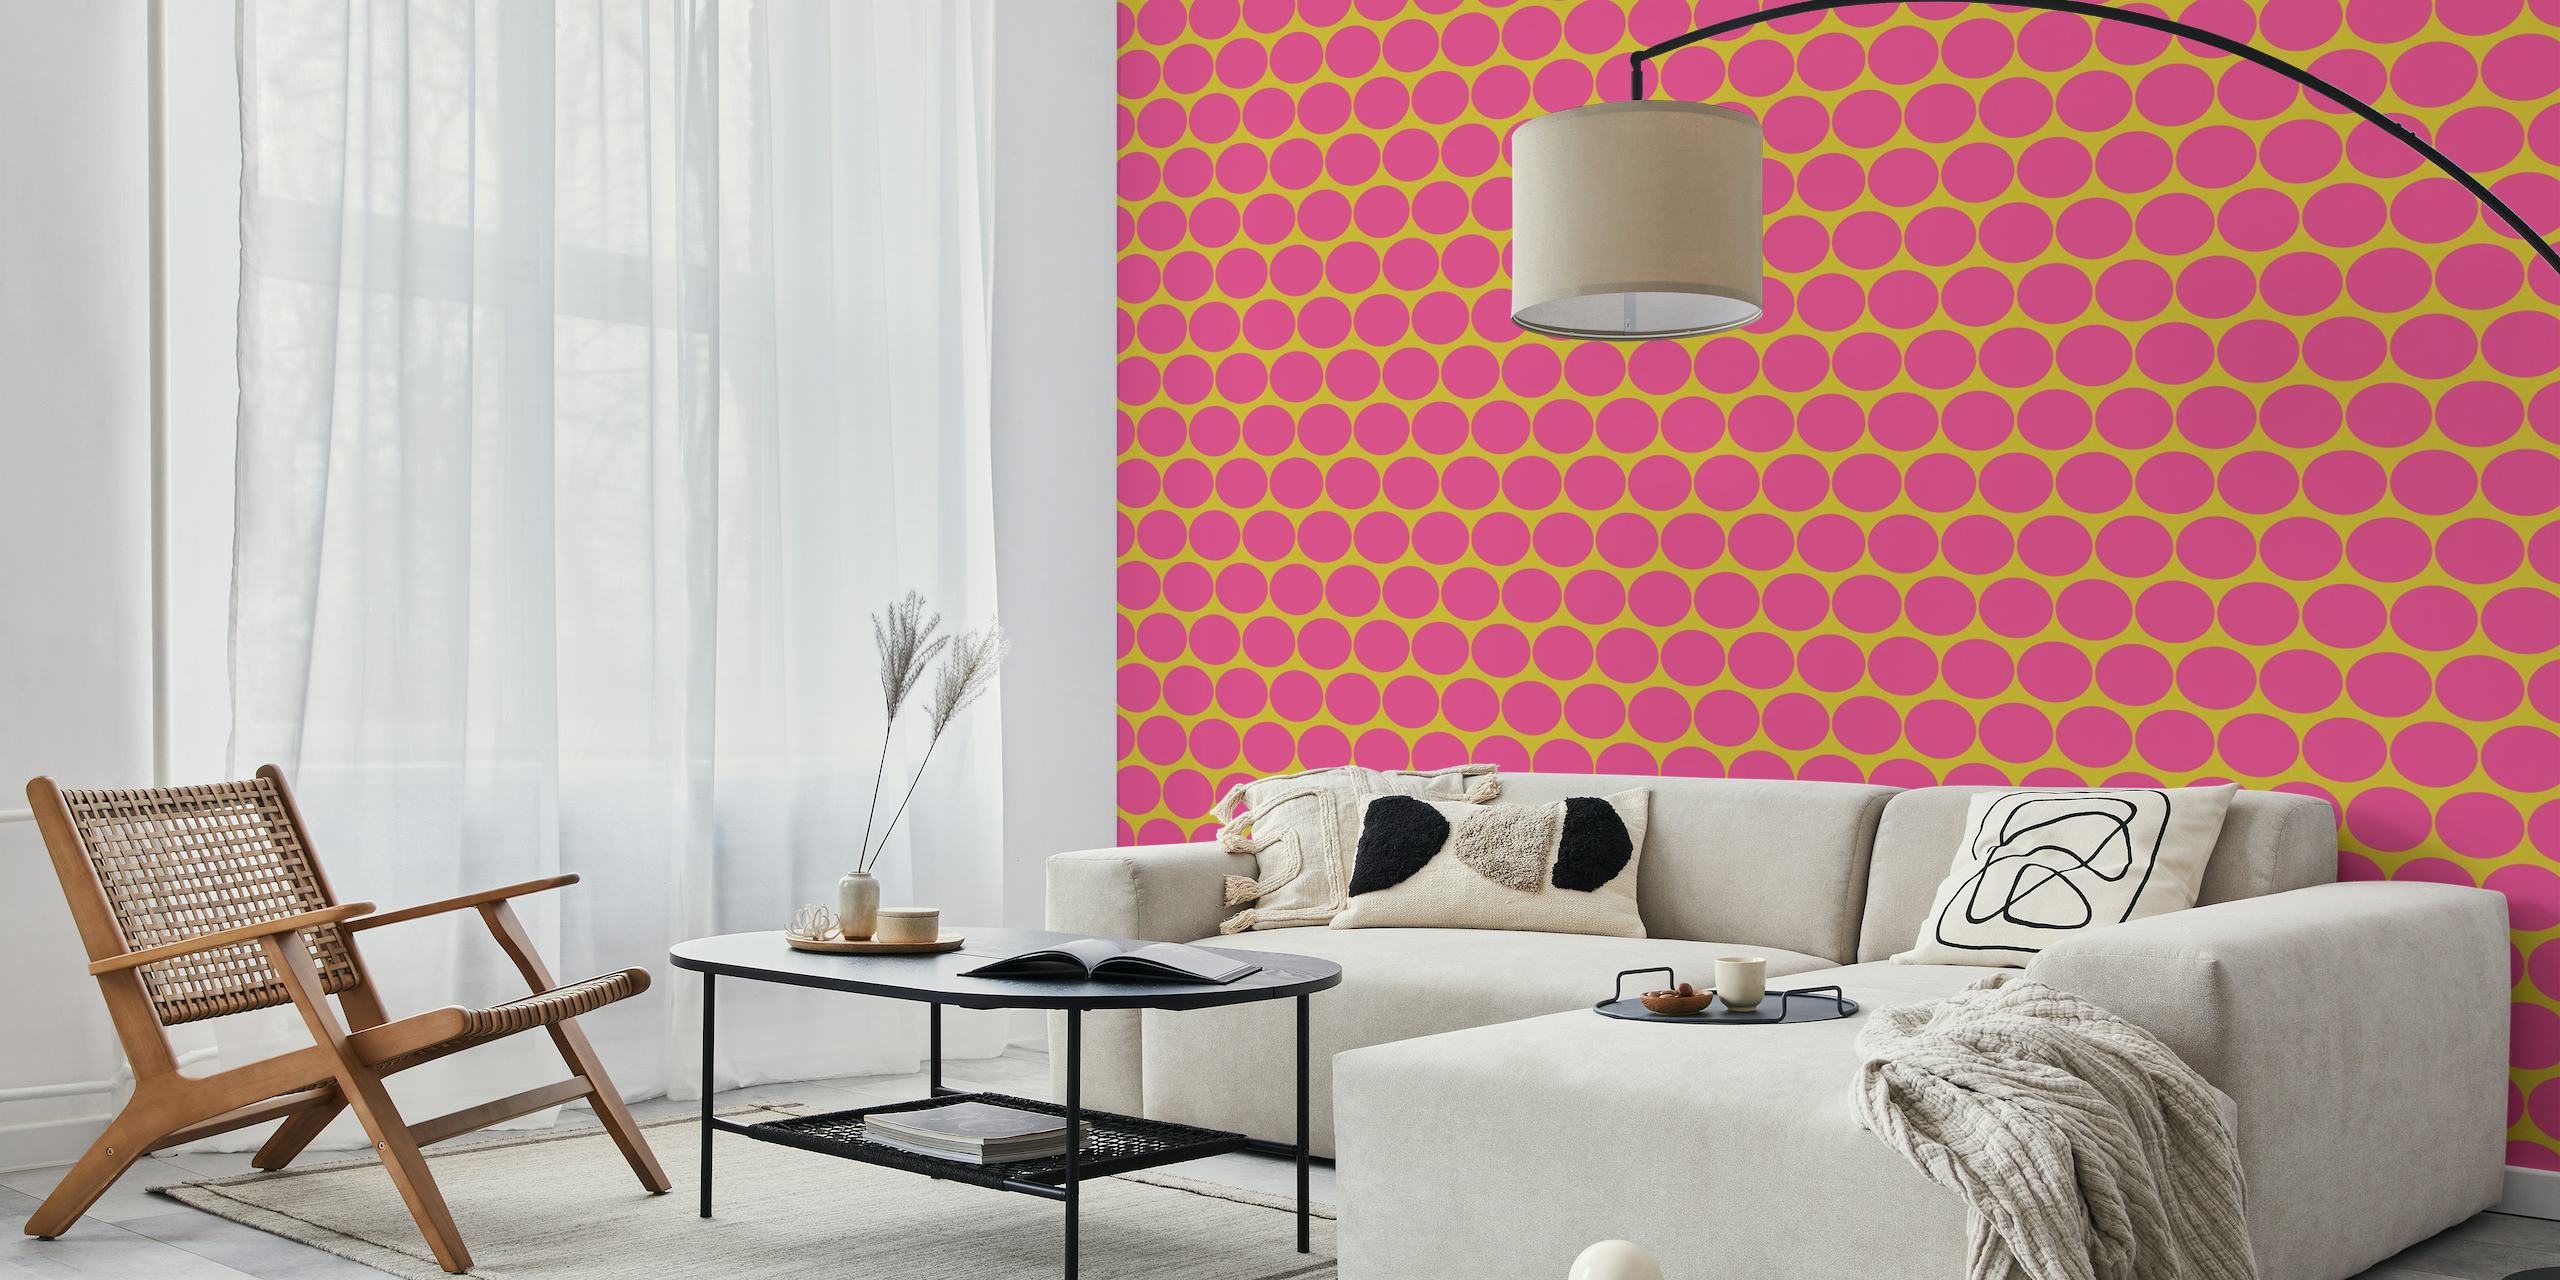 70s Big Dots - Hot Pink / Empire Yellow papel pintado